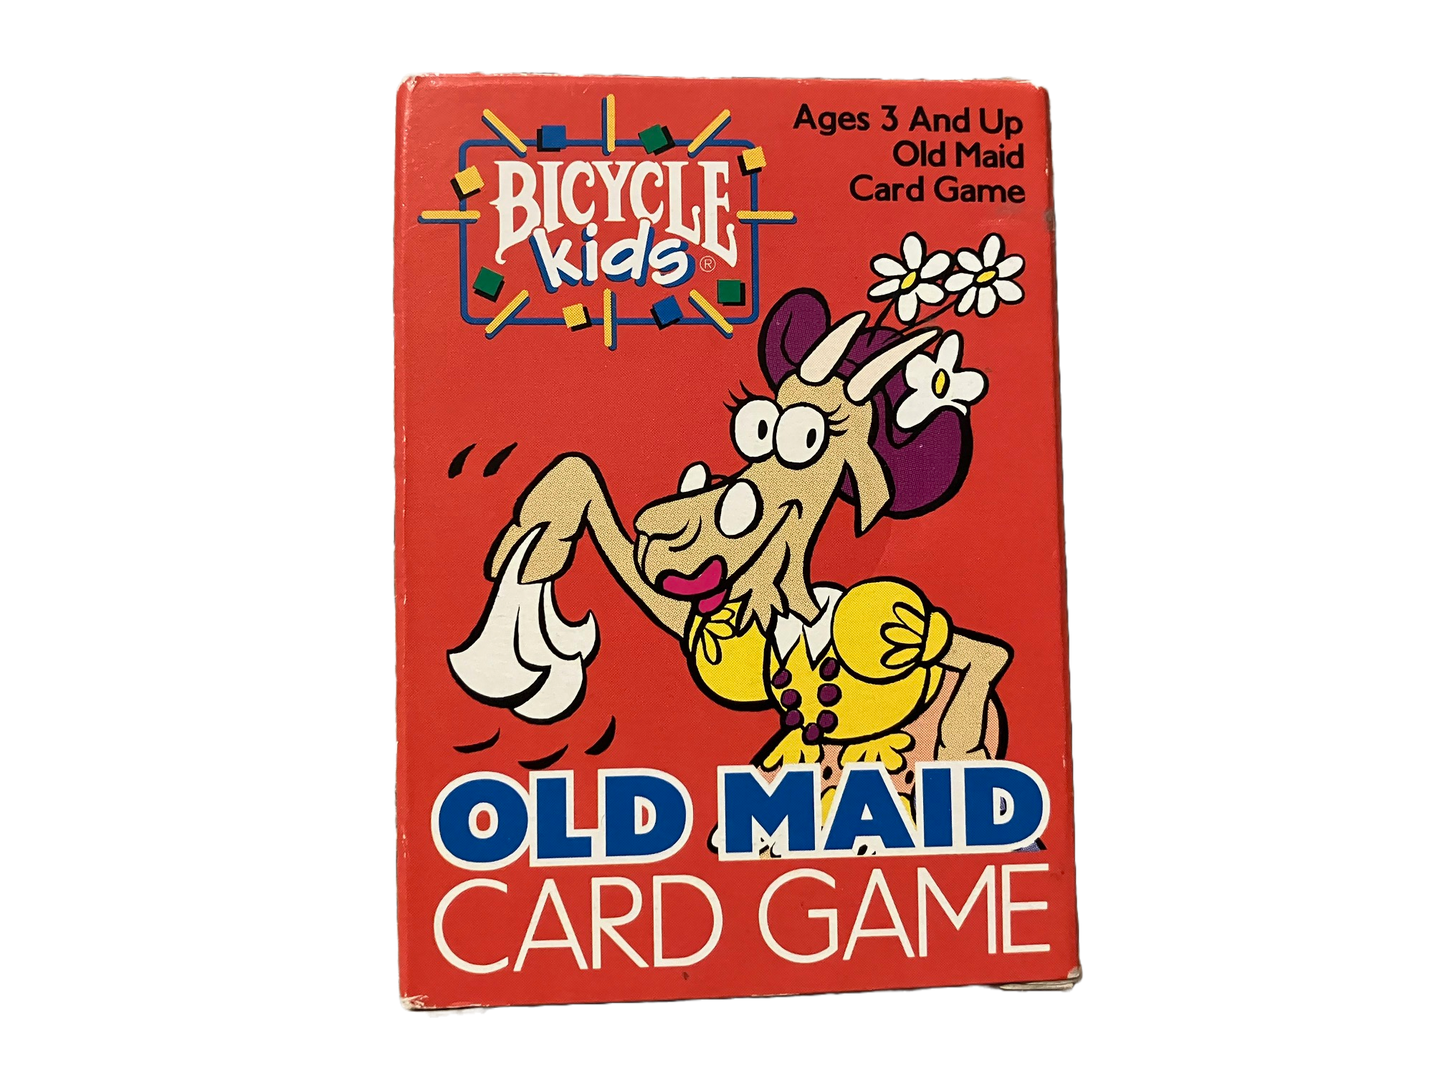 Old Maid Bicycle Kids Card Game